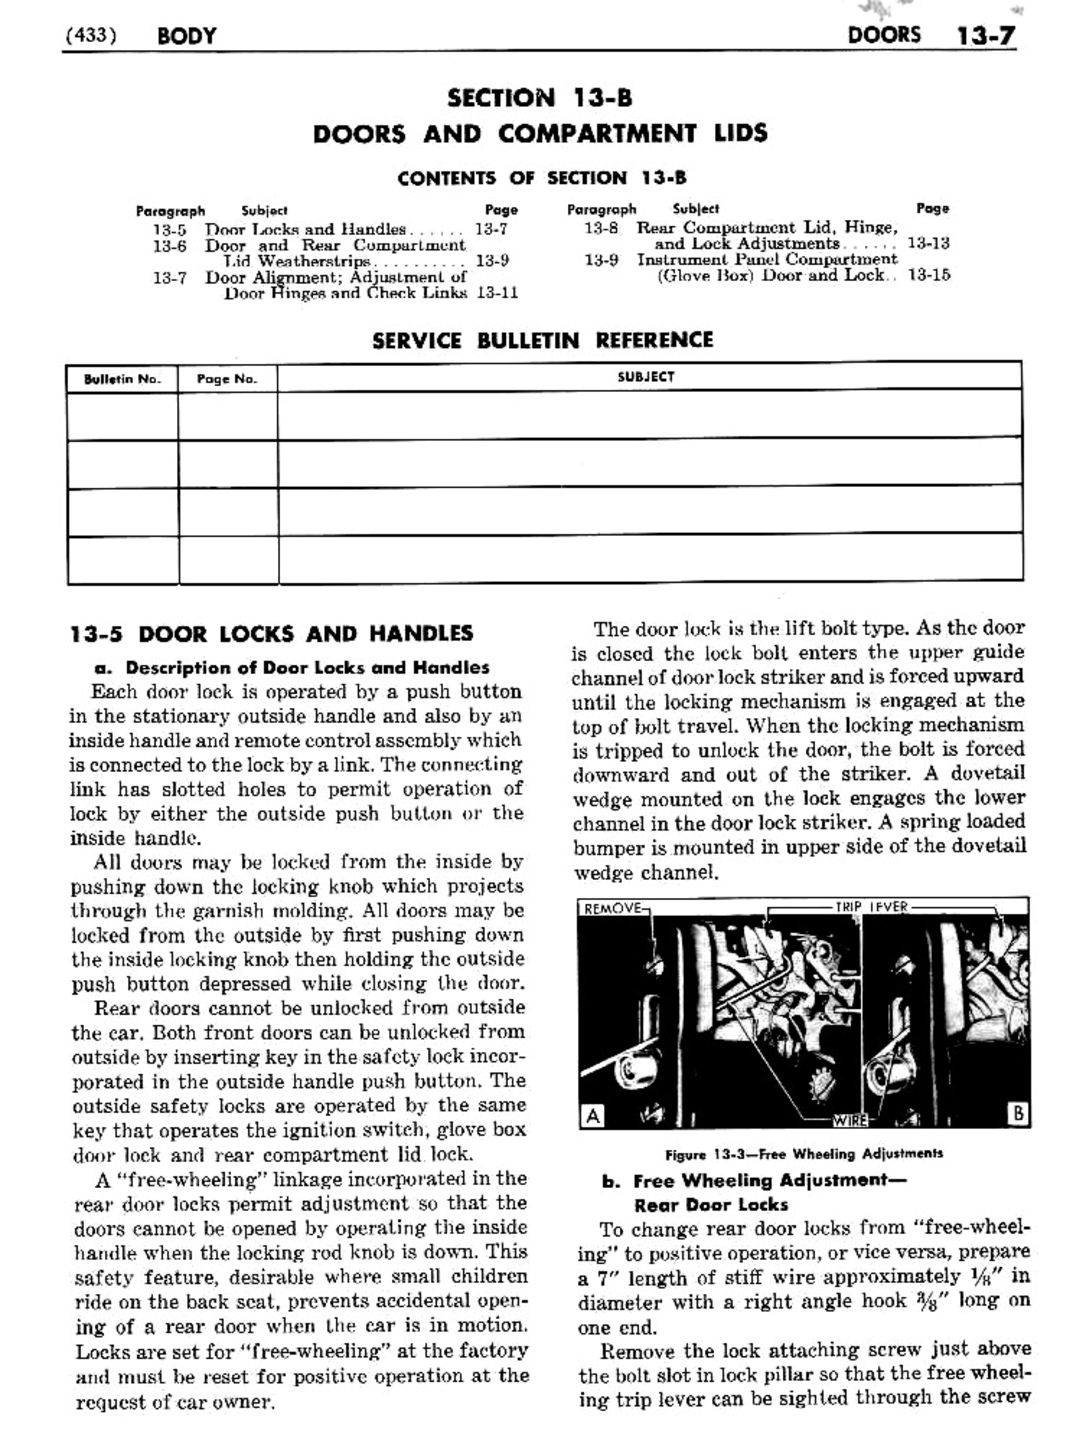 n_14 1951 Buick Shop Manual - Body-007-007.jpg